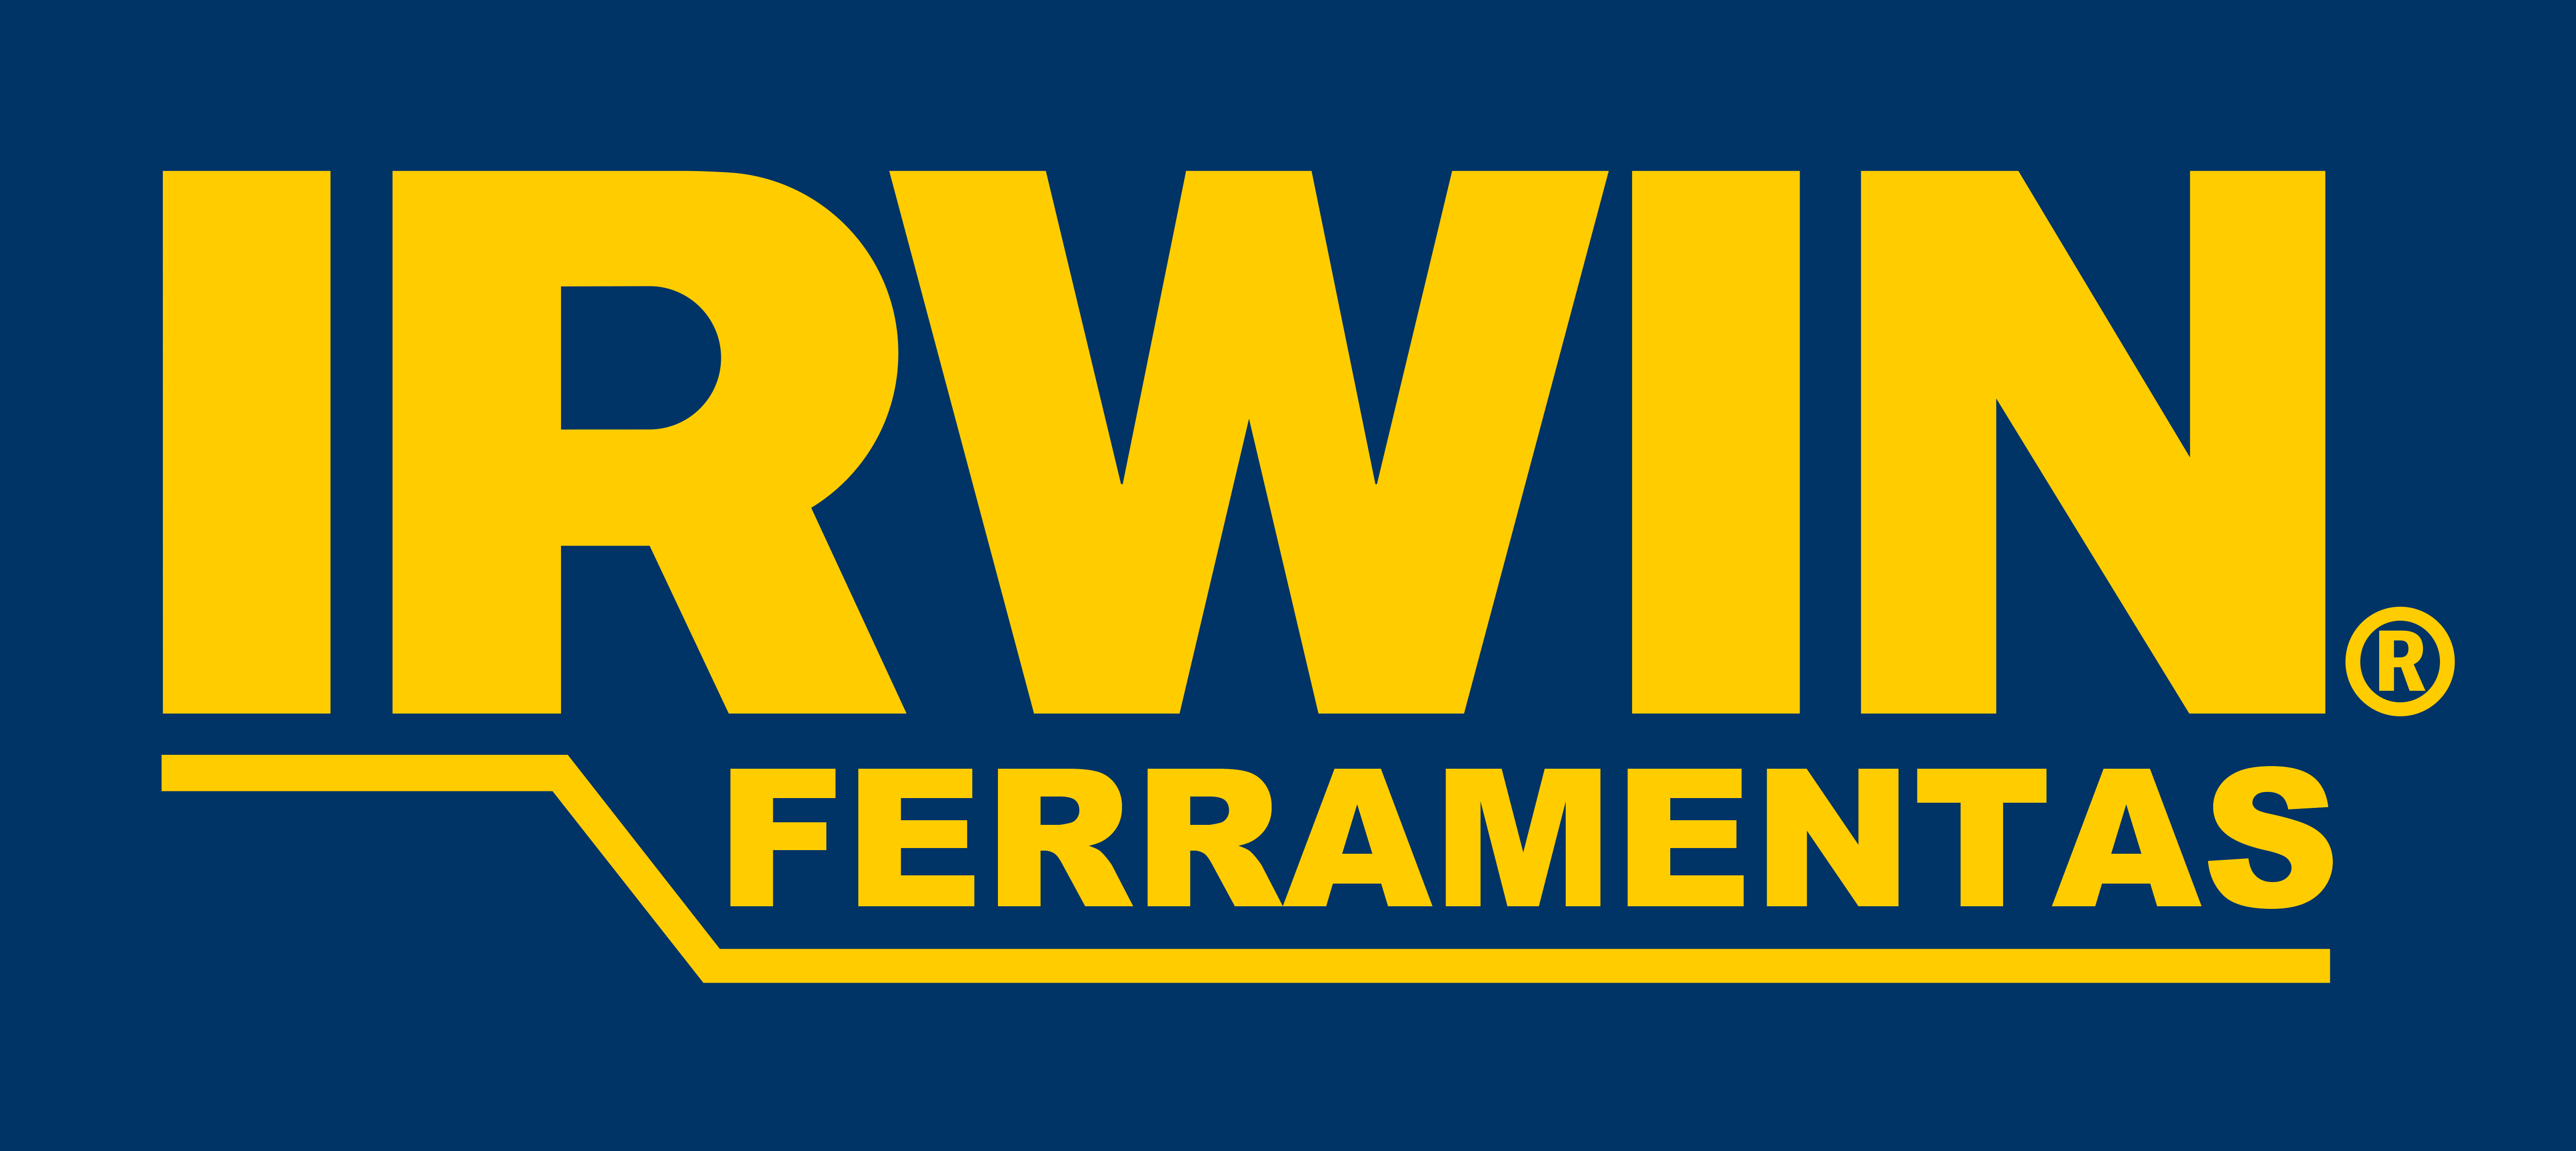 IRWIN Logo.